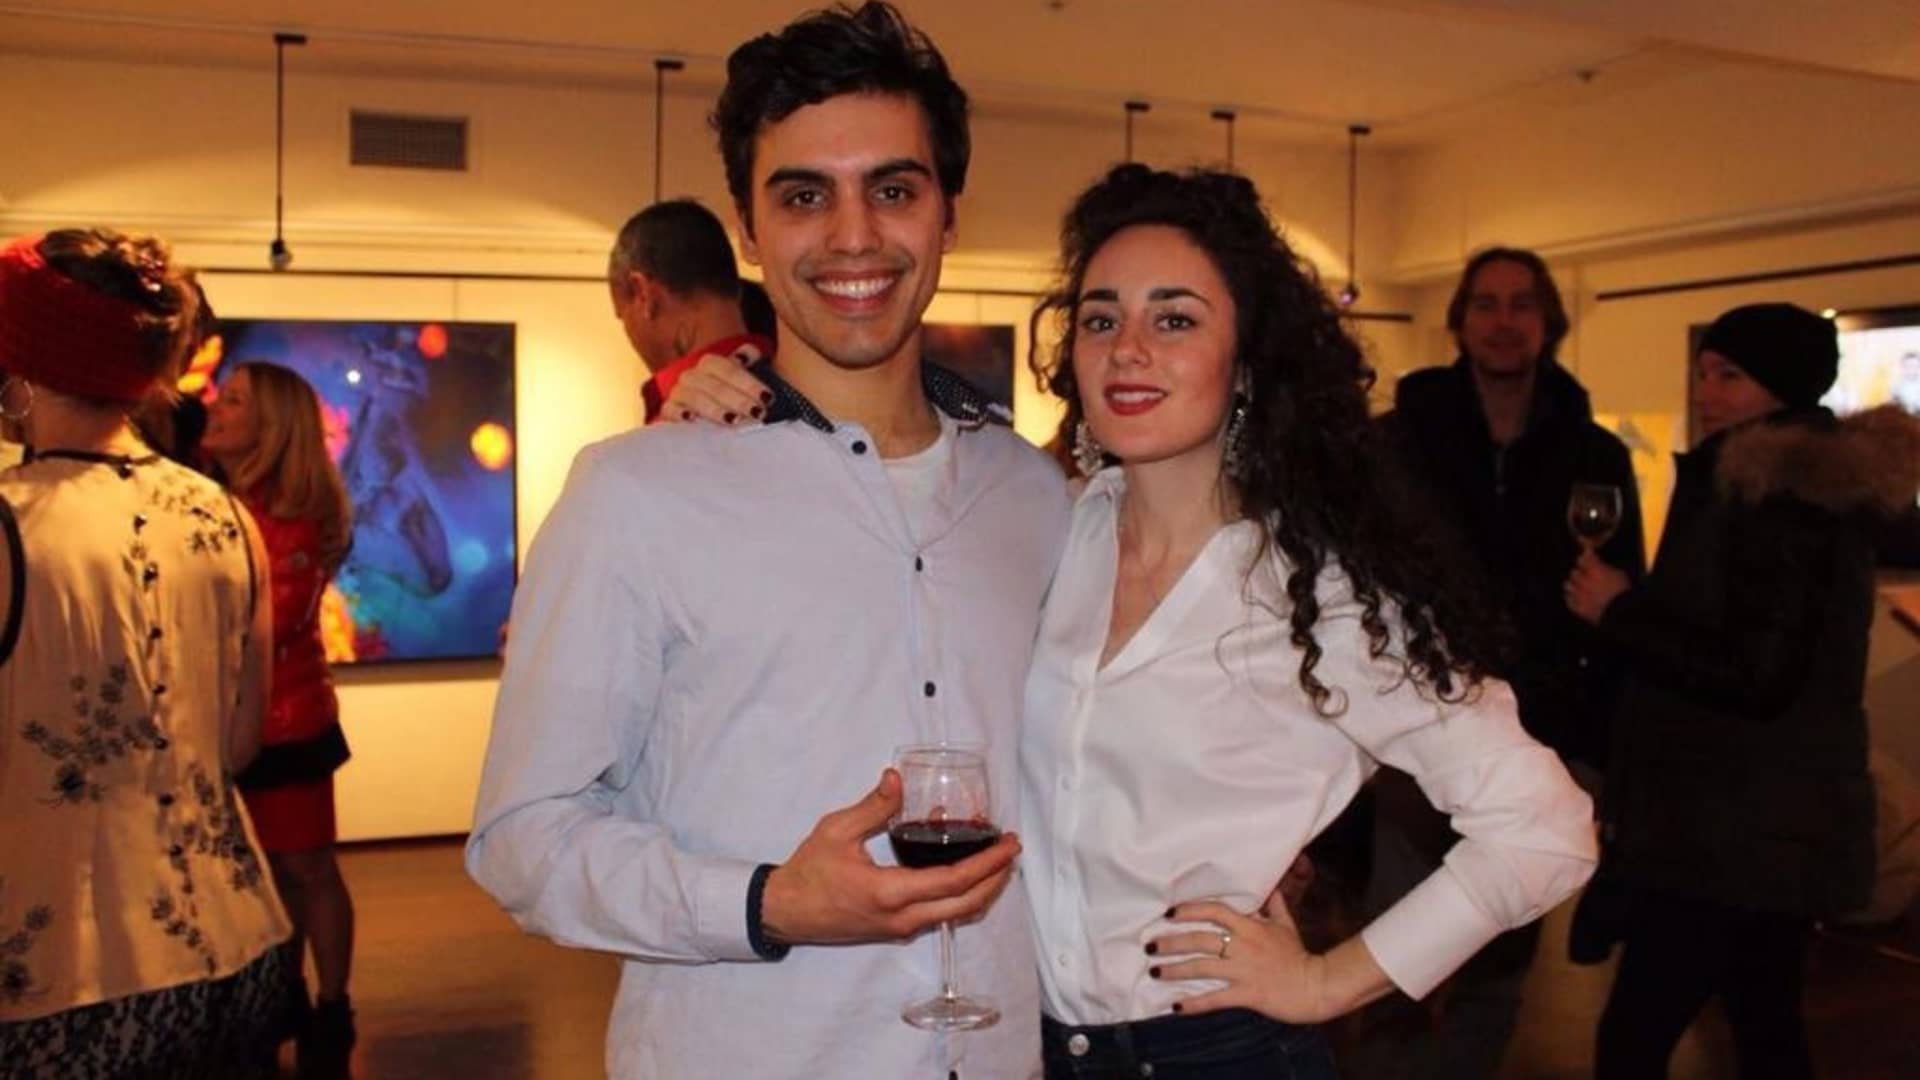 Lucas and Yana Bononi at an art exhibition.